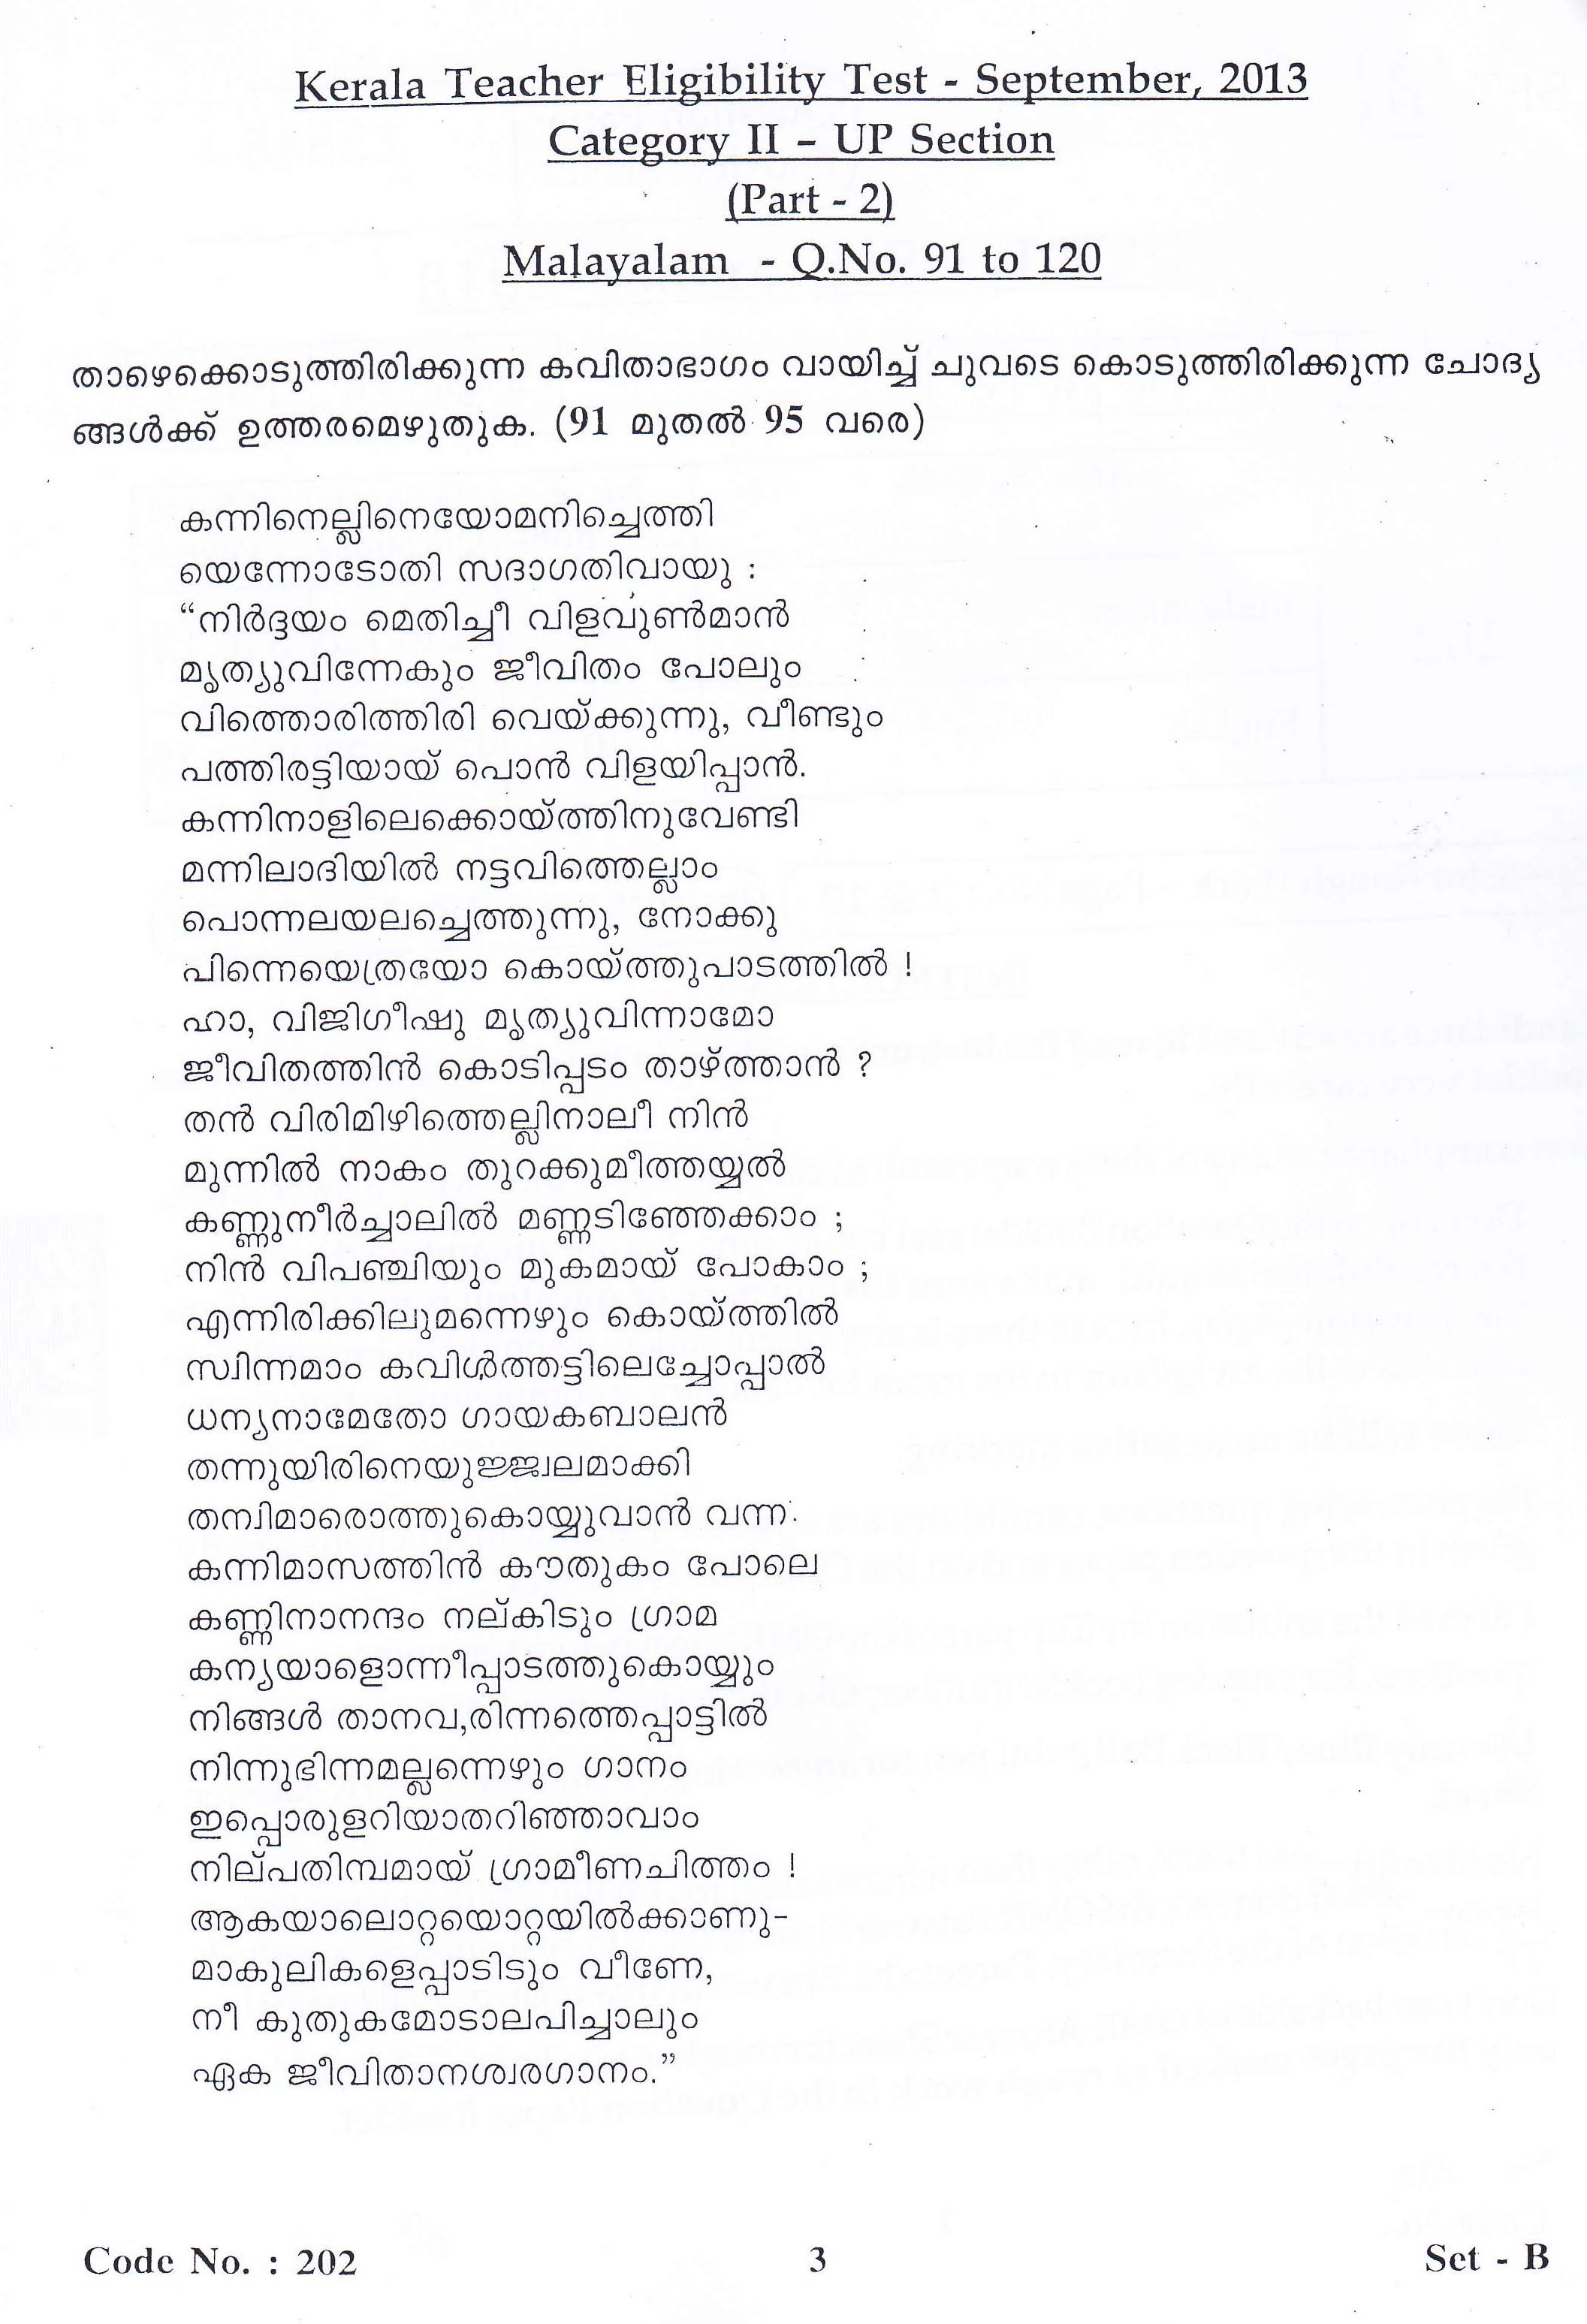 KTET Category II Part 2 Malayalam September 2013 Set B 1